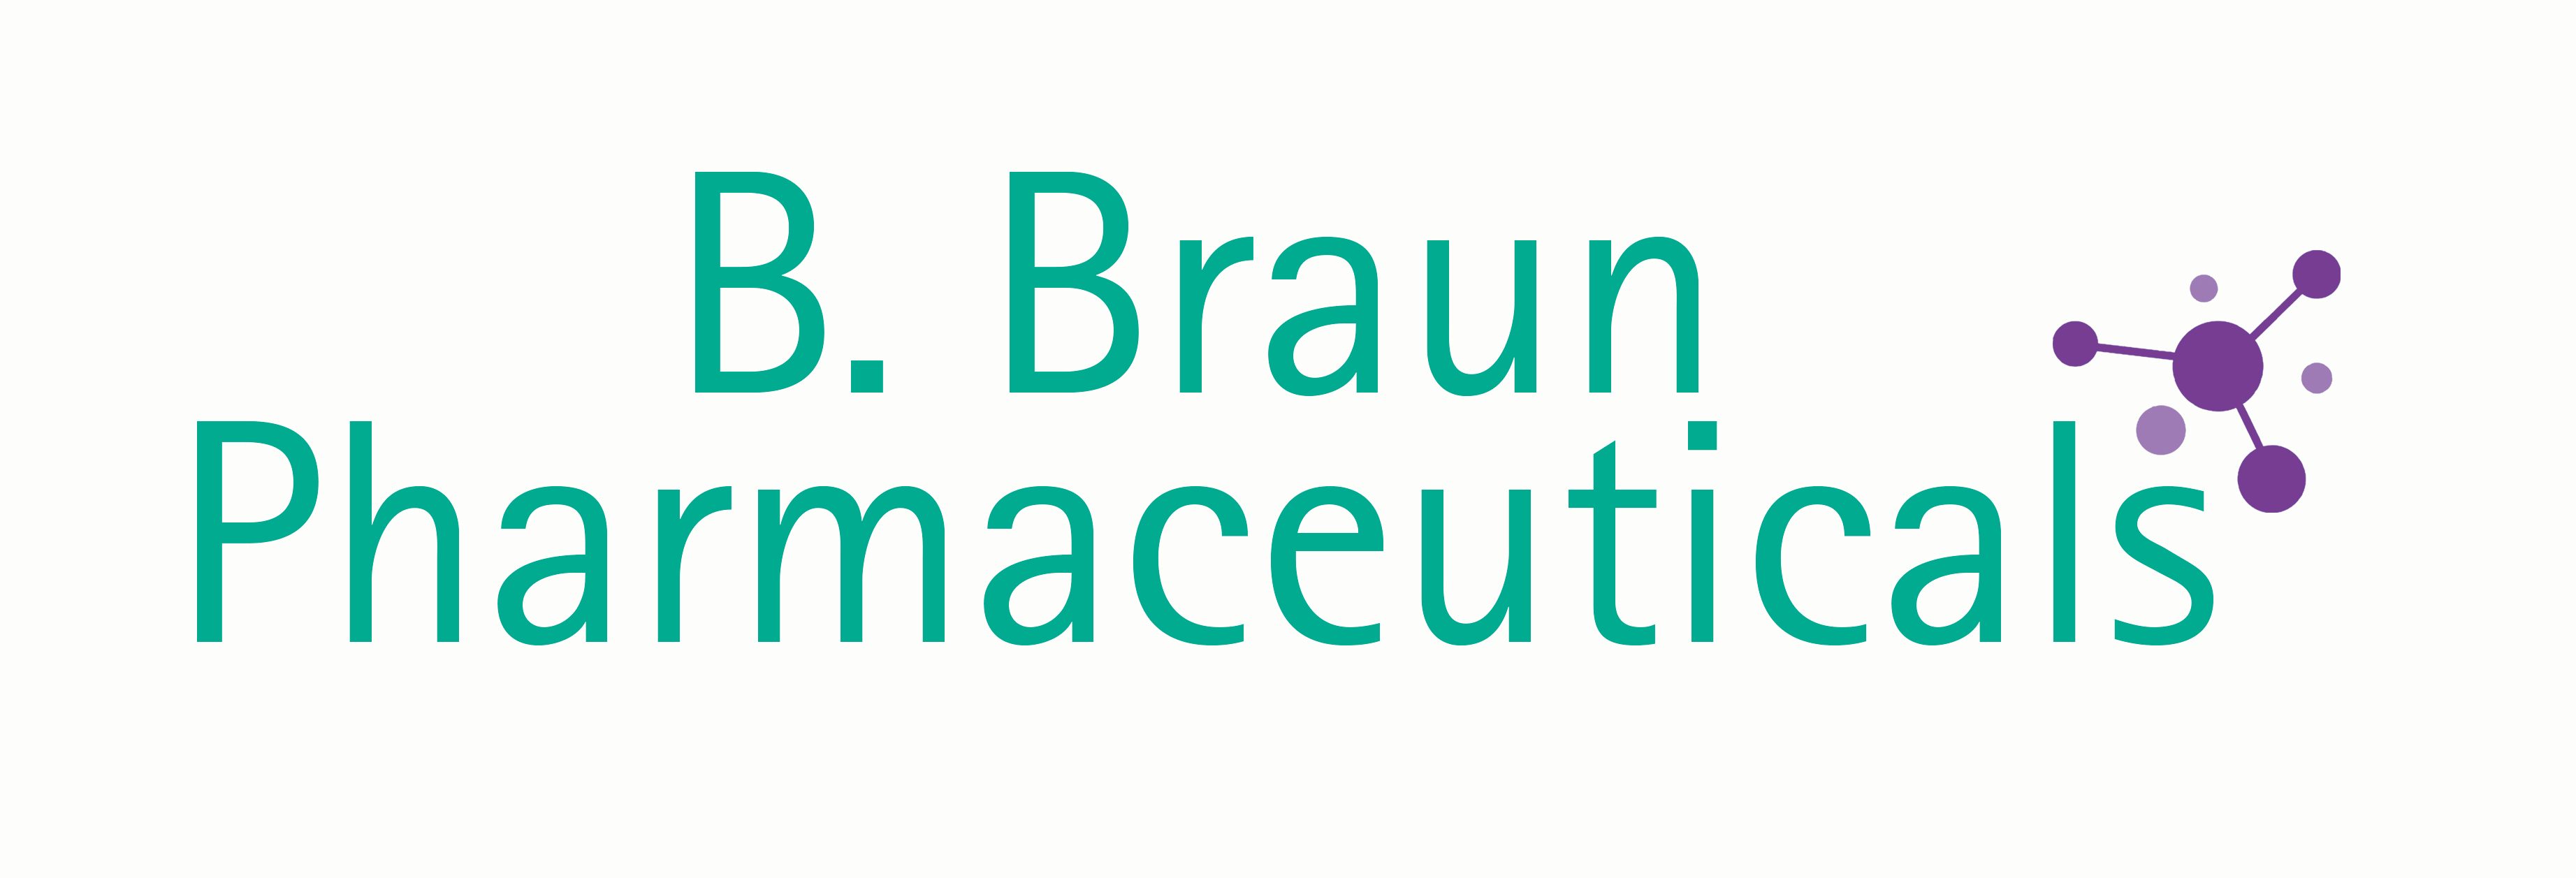 B. Braun Pharmaceuticals